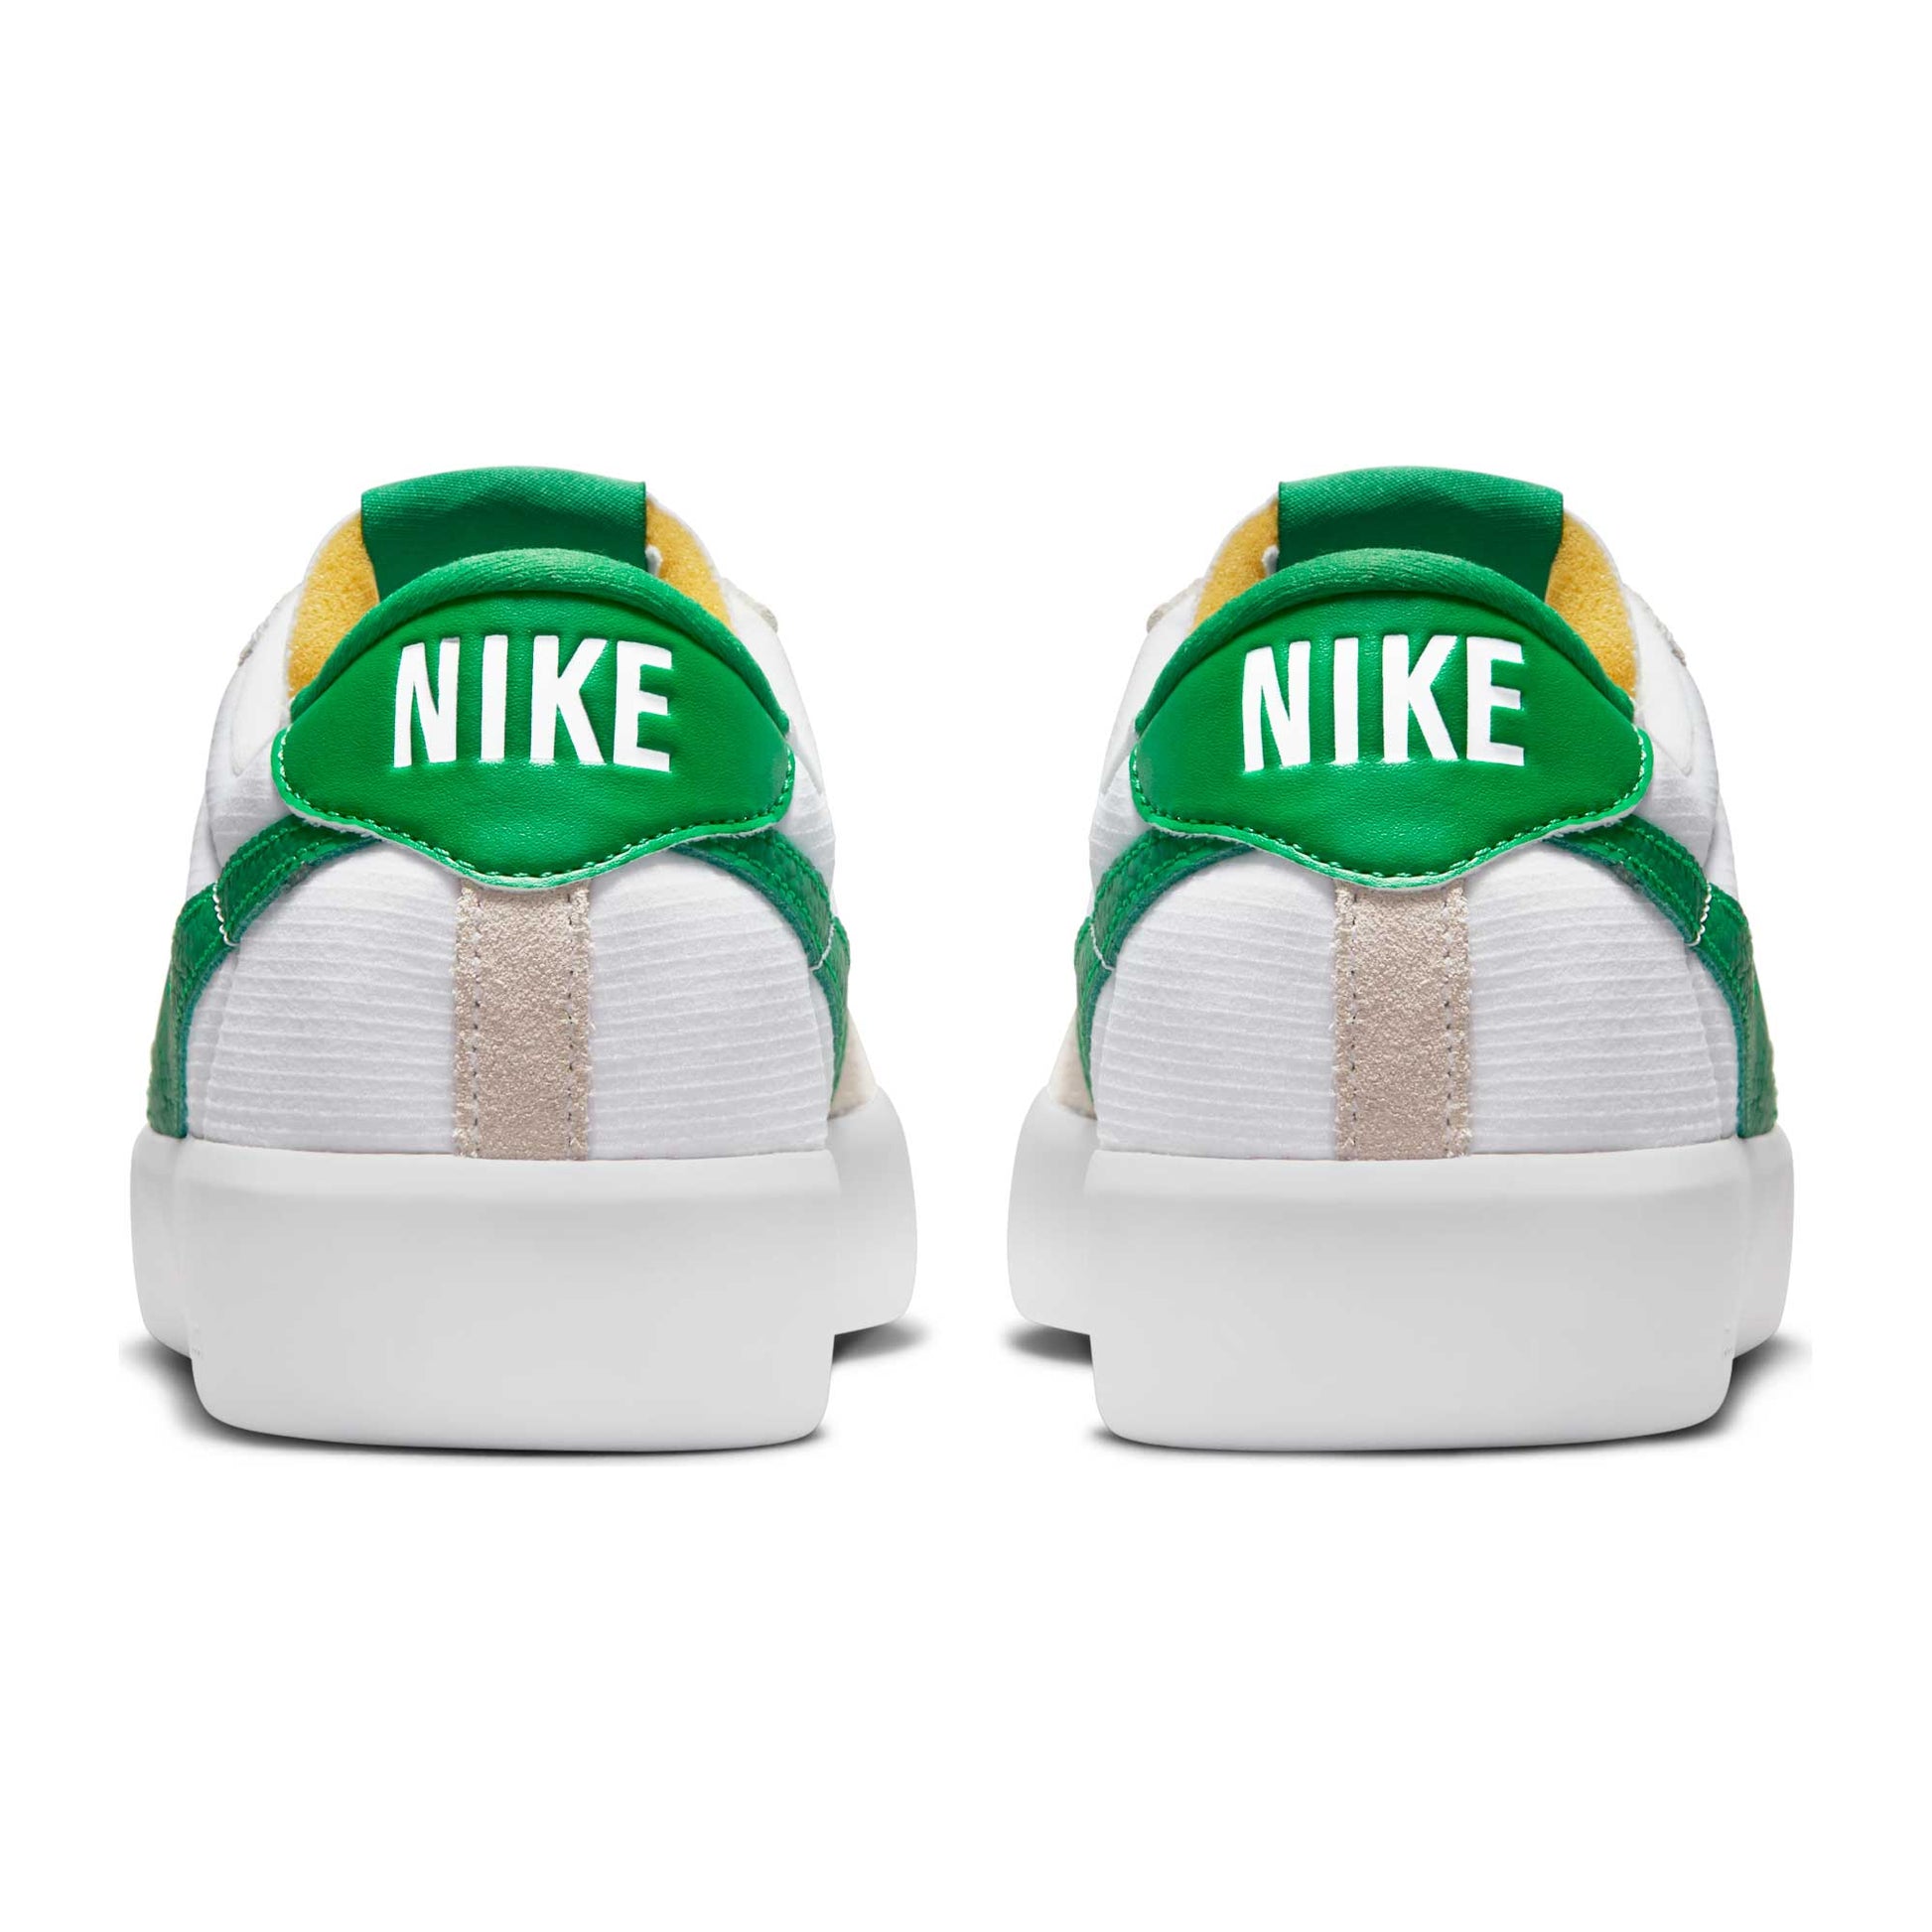 Nike SB Bruin React, white/lucky green-white-lucky green - Tiki Room Skateboards - 6